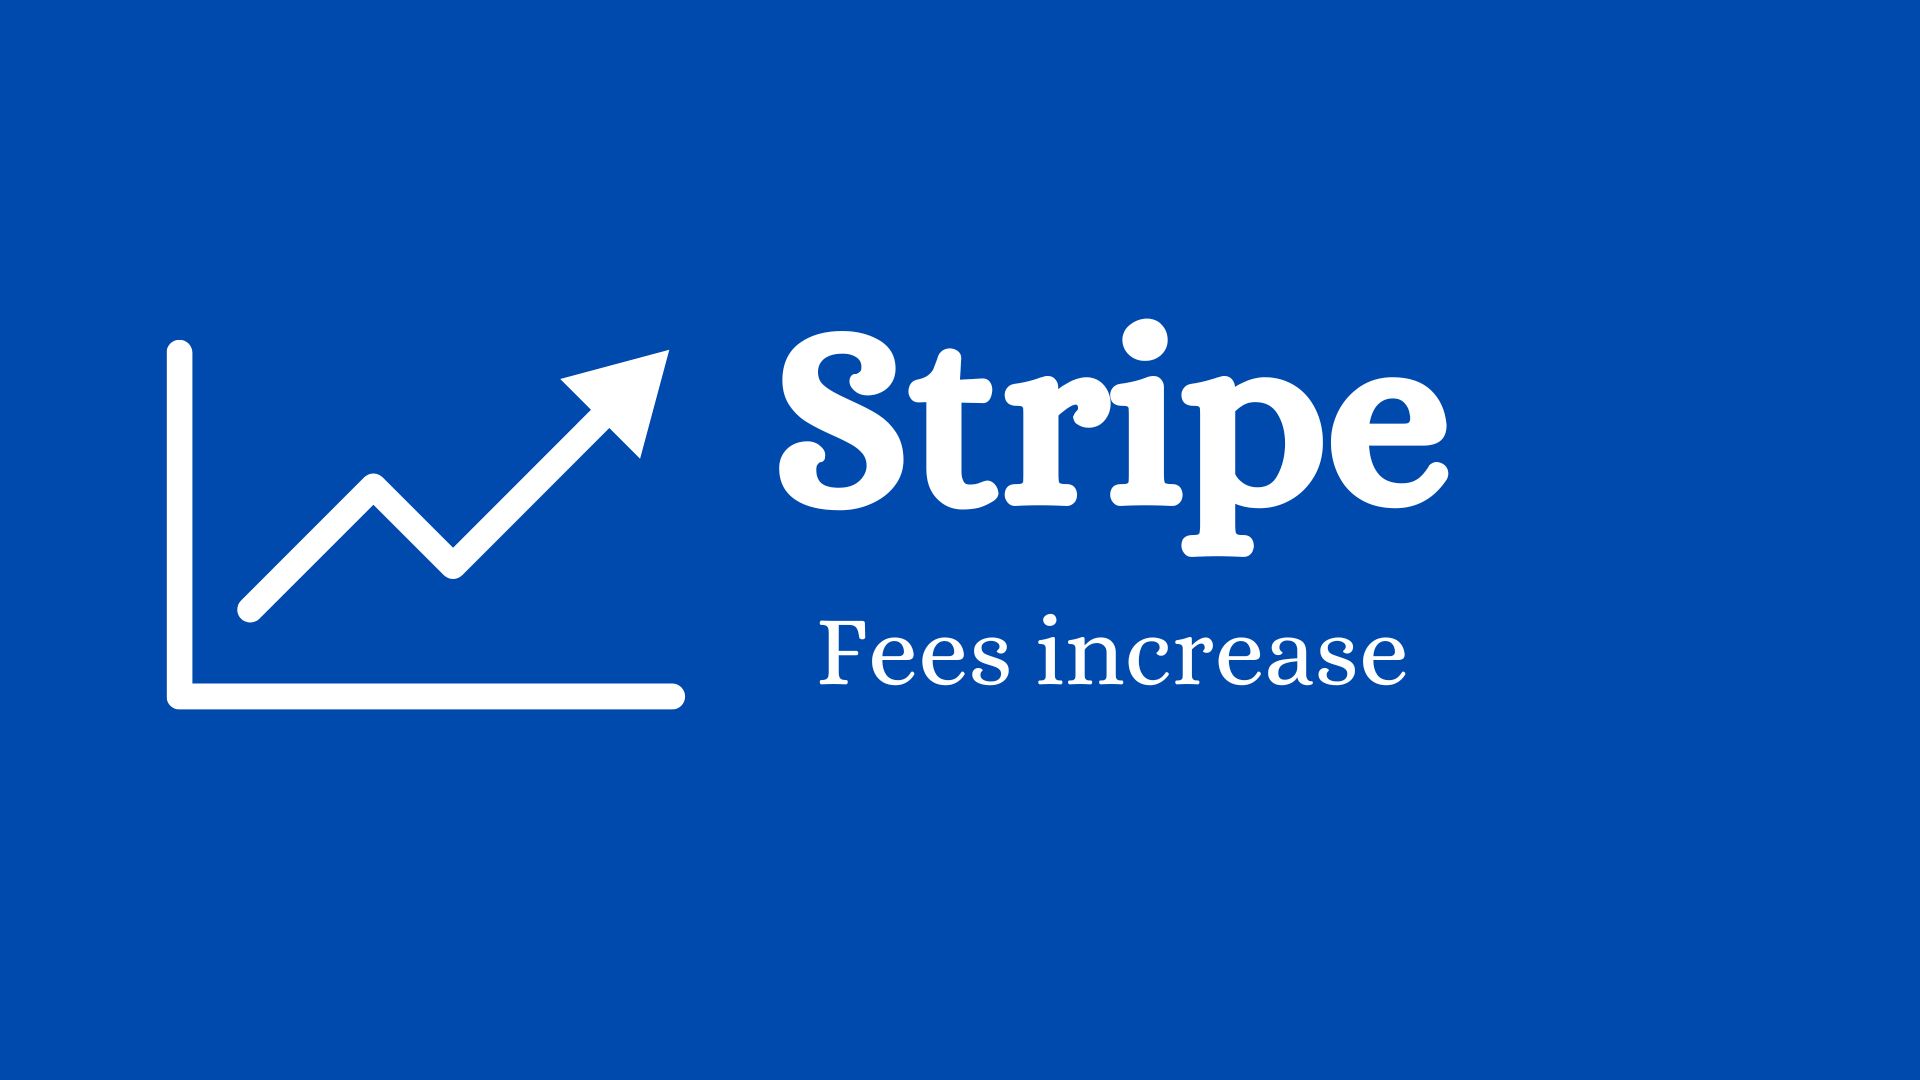 New Stripe transaction fees